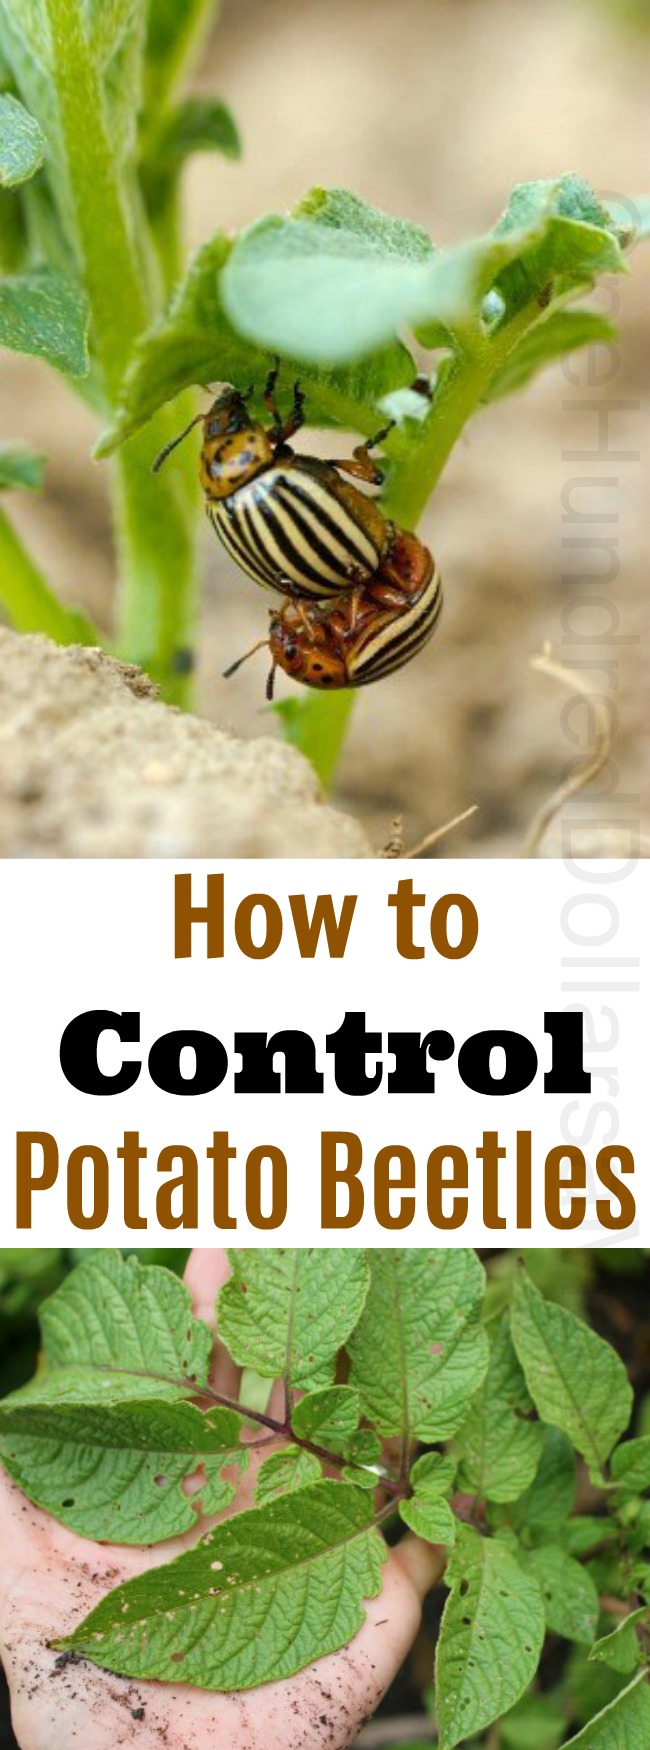 How to Control Potato Beetles {Bugs}